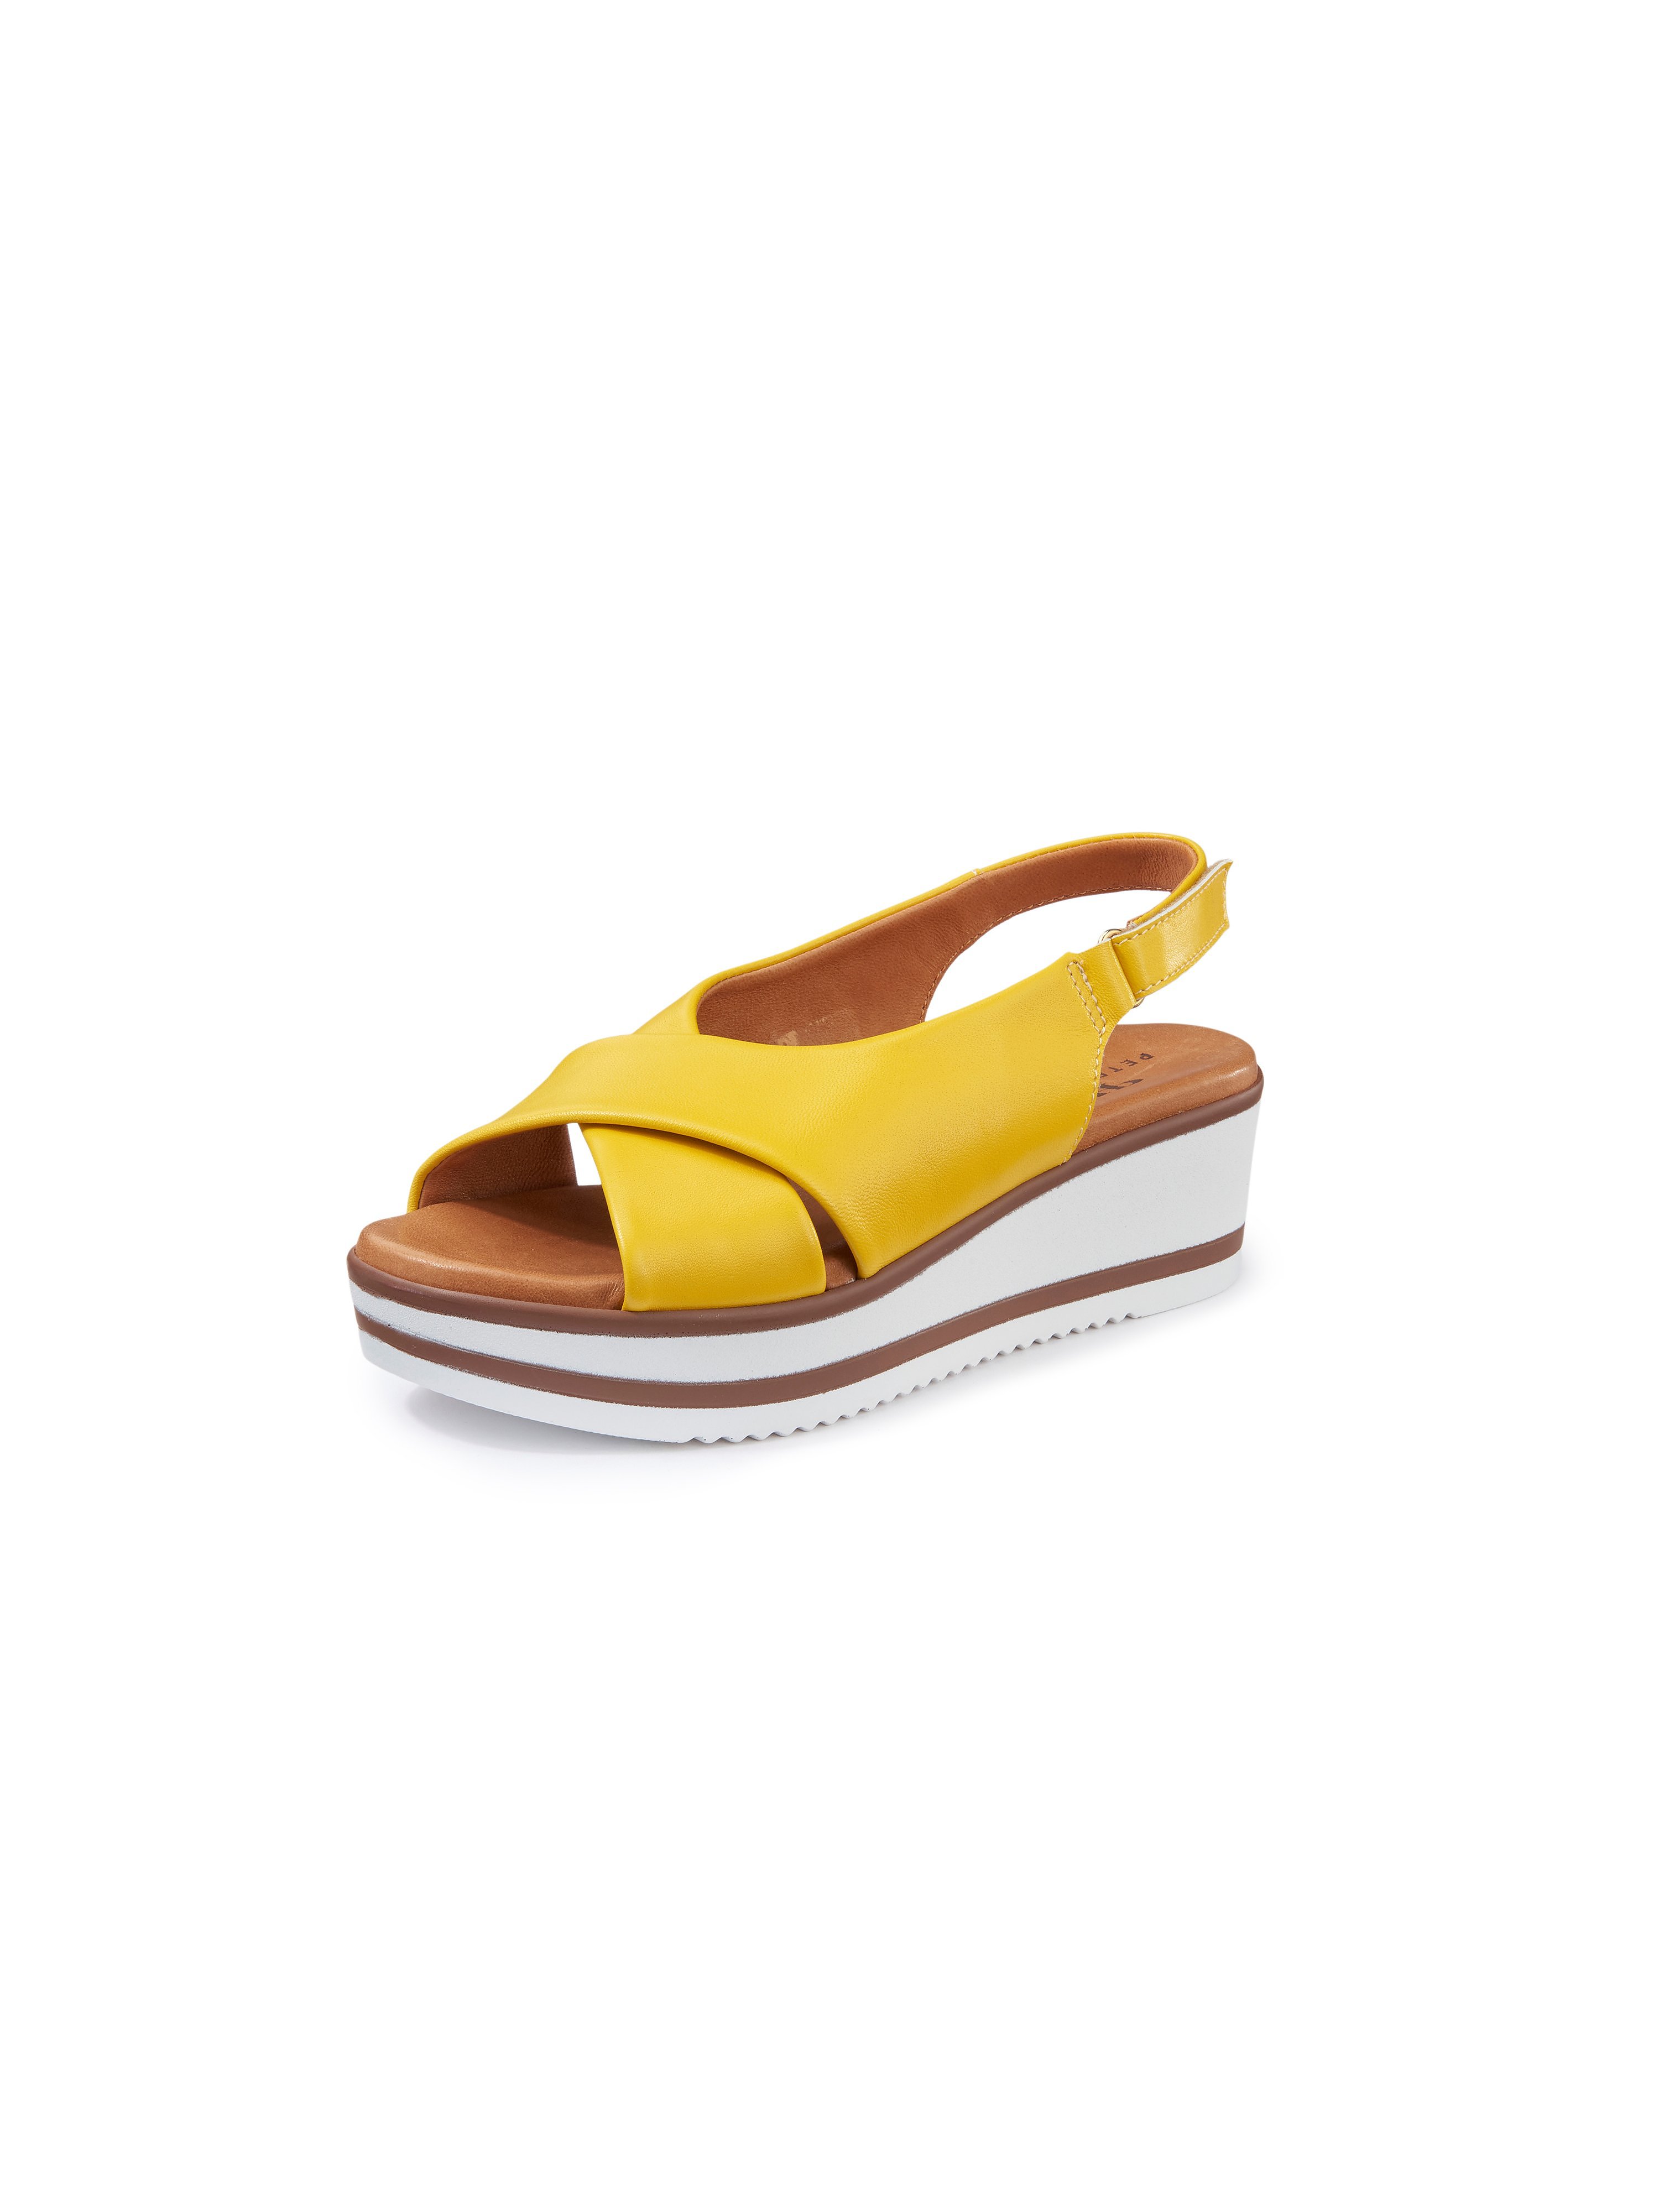 Les sandales 100% cuir  Peter Hahn jaune taille 42